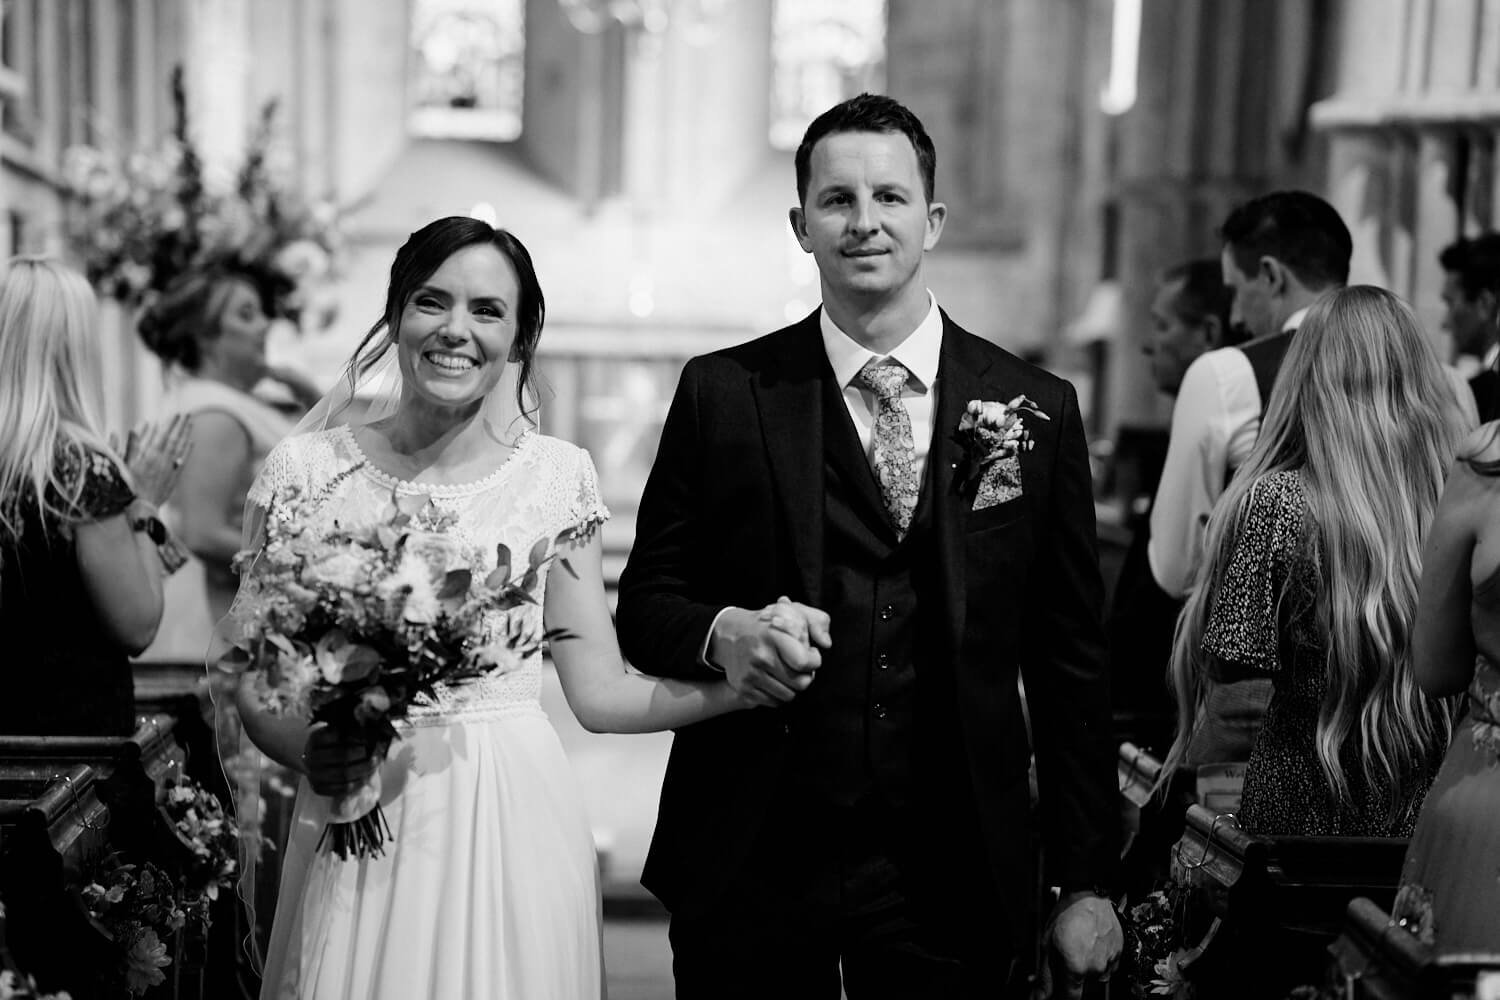 Wedding Photographer, Surrey | Leanne and Oli’s Farnham Wedding 24